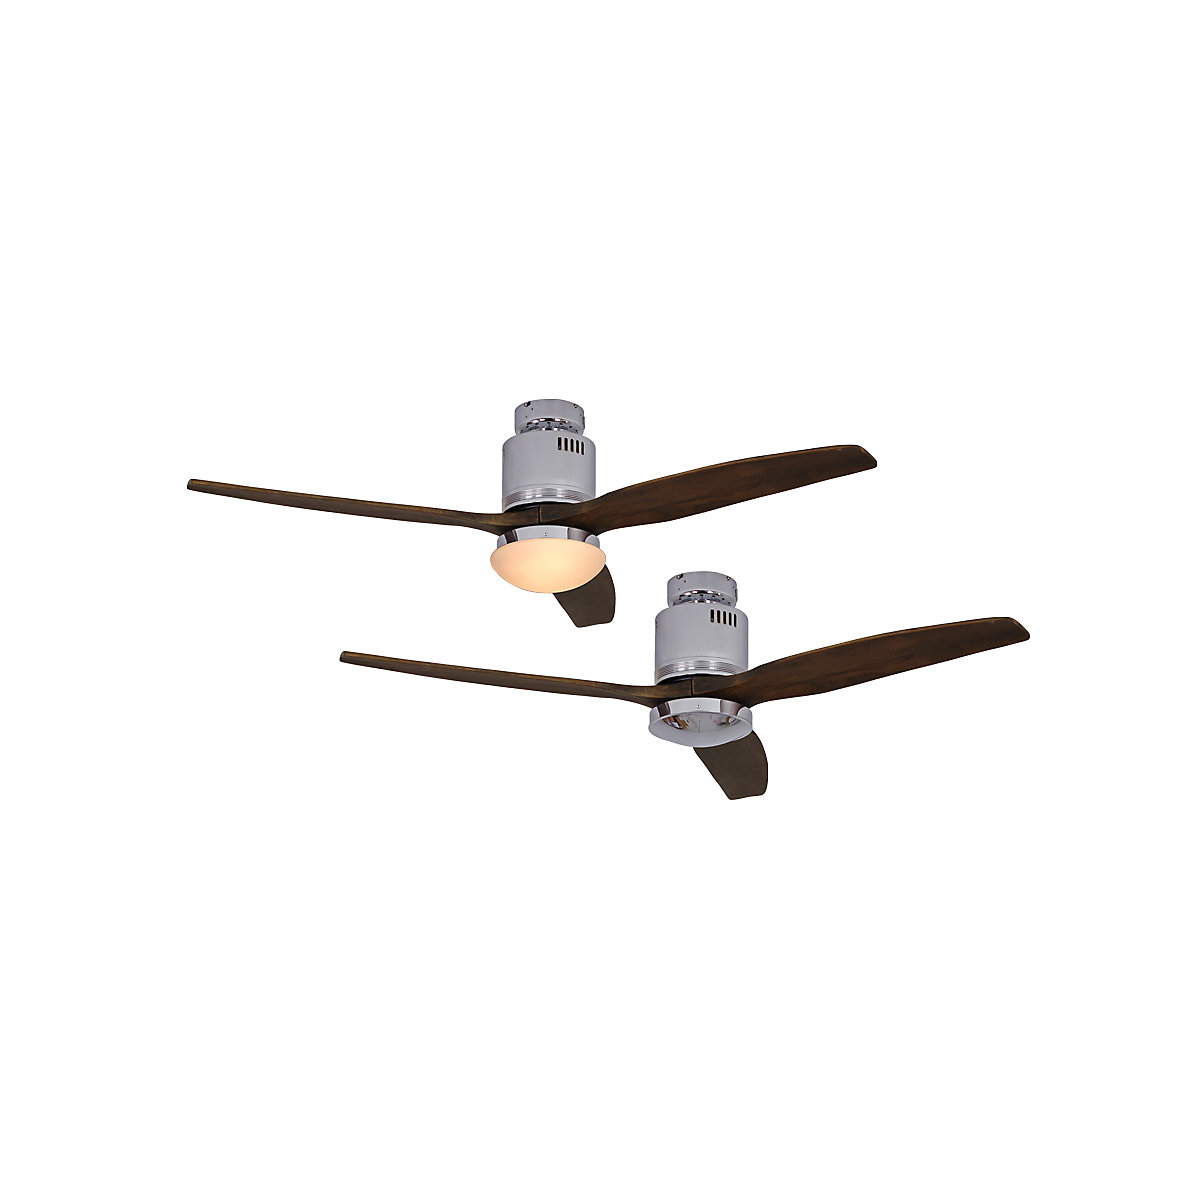 Plafondventilator AERODYNAMIX, propellerblad-Ø 1320 mm, notenhout / chroom glanzend